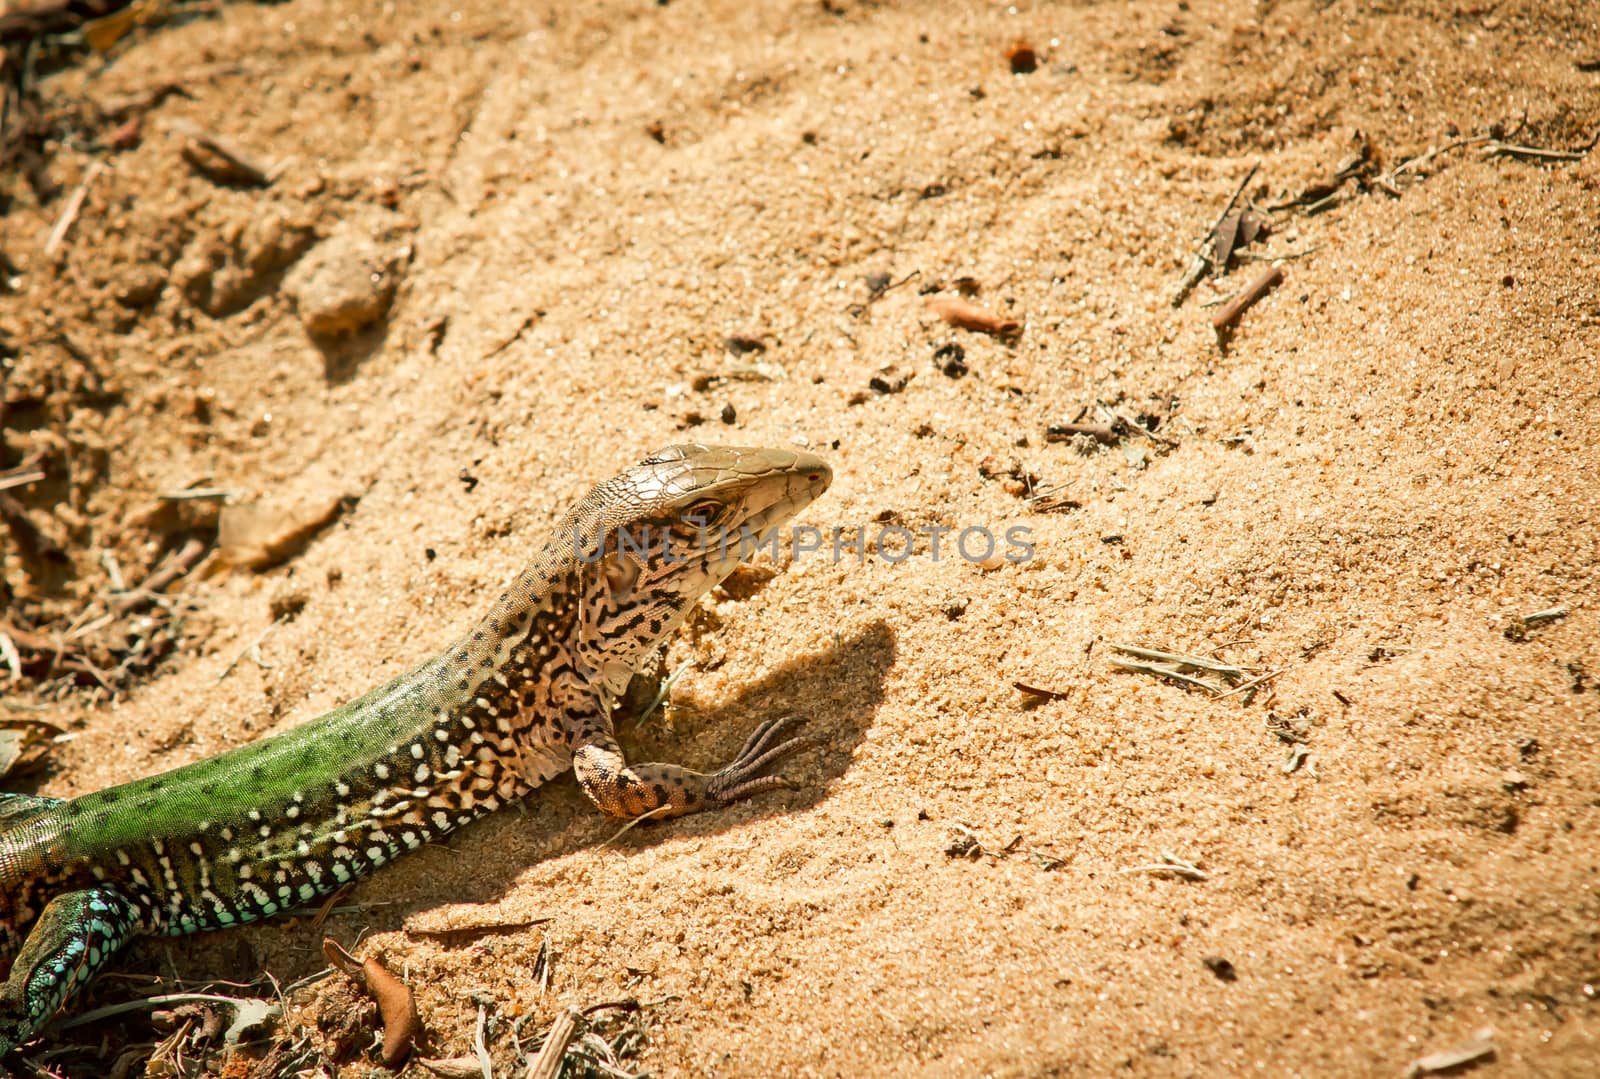 Small sunlit lizard on sand ground